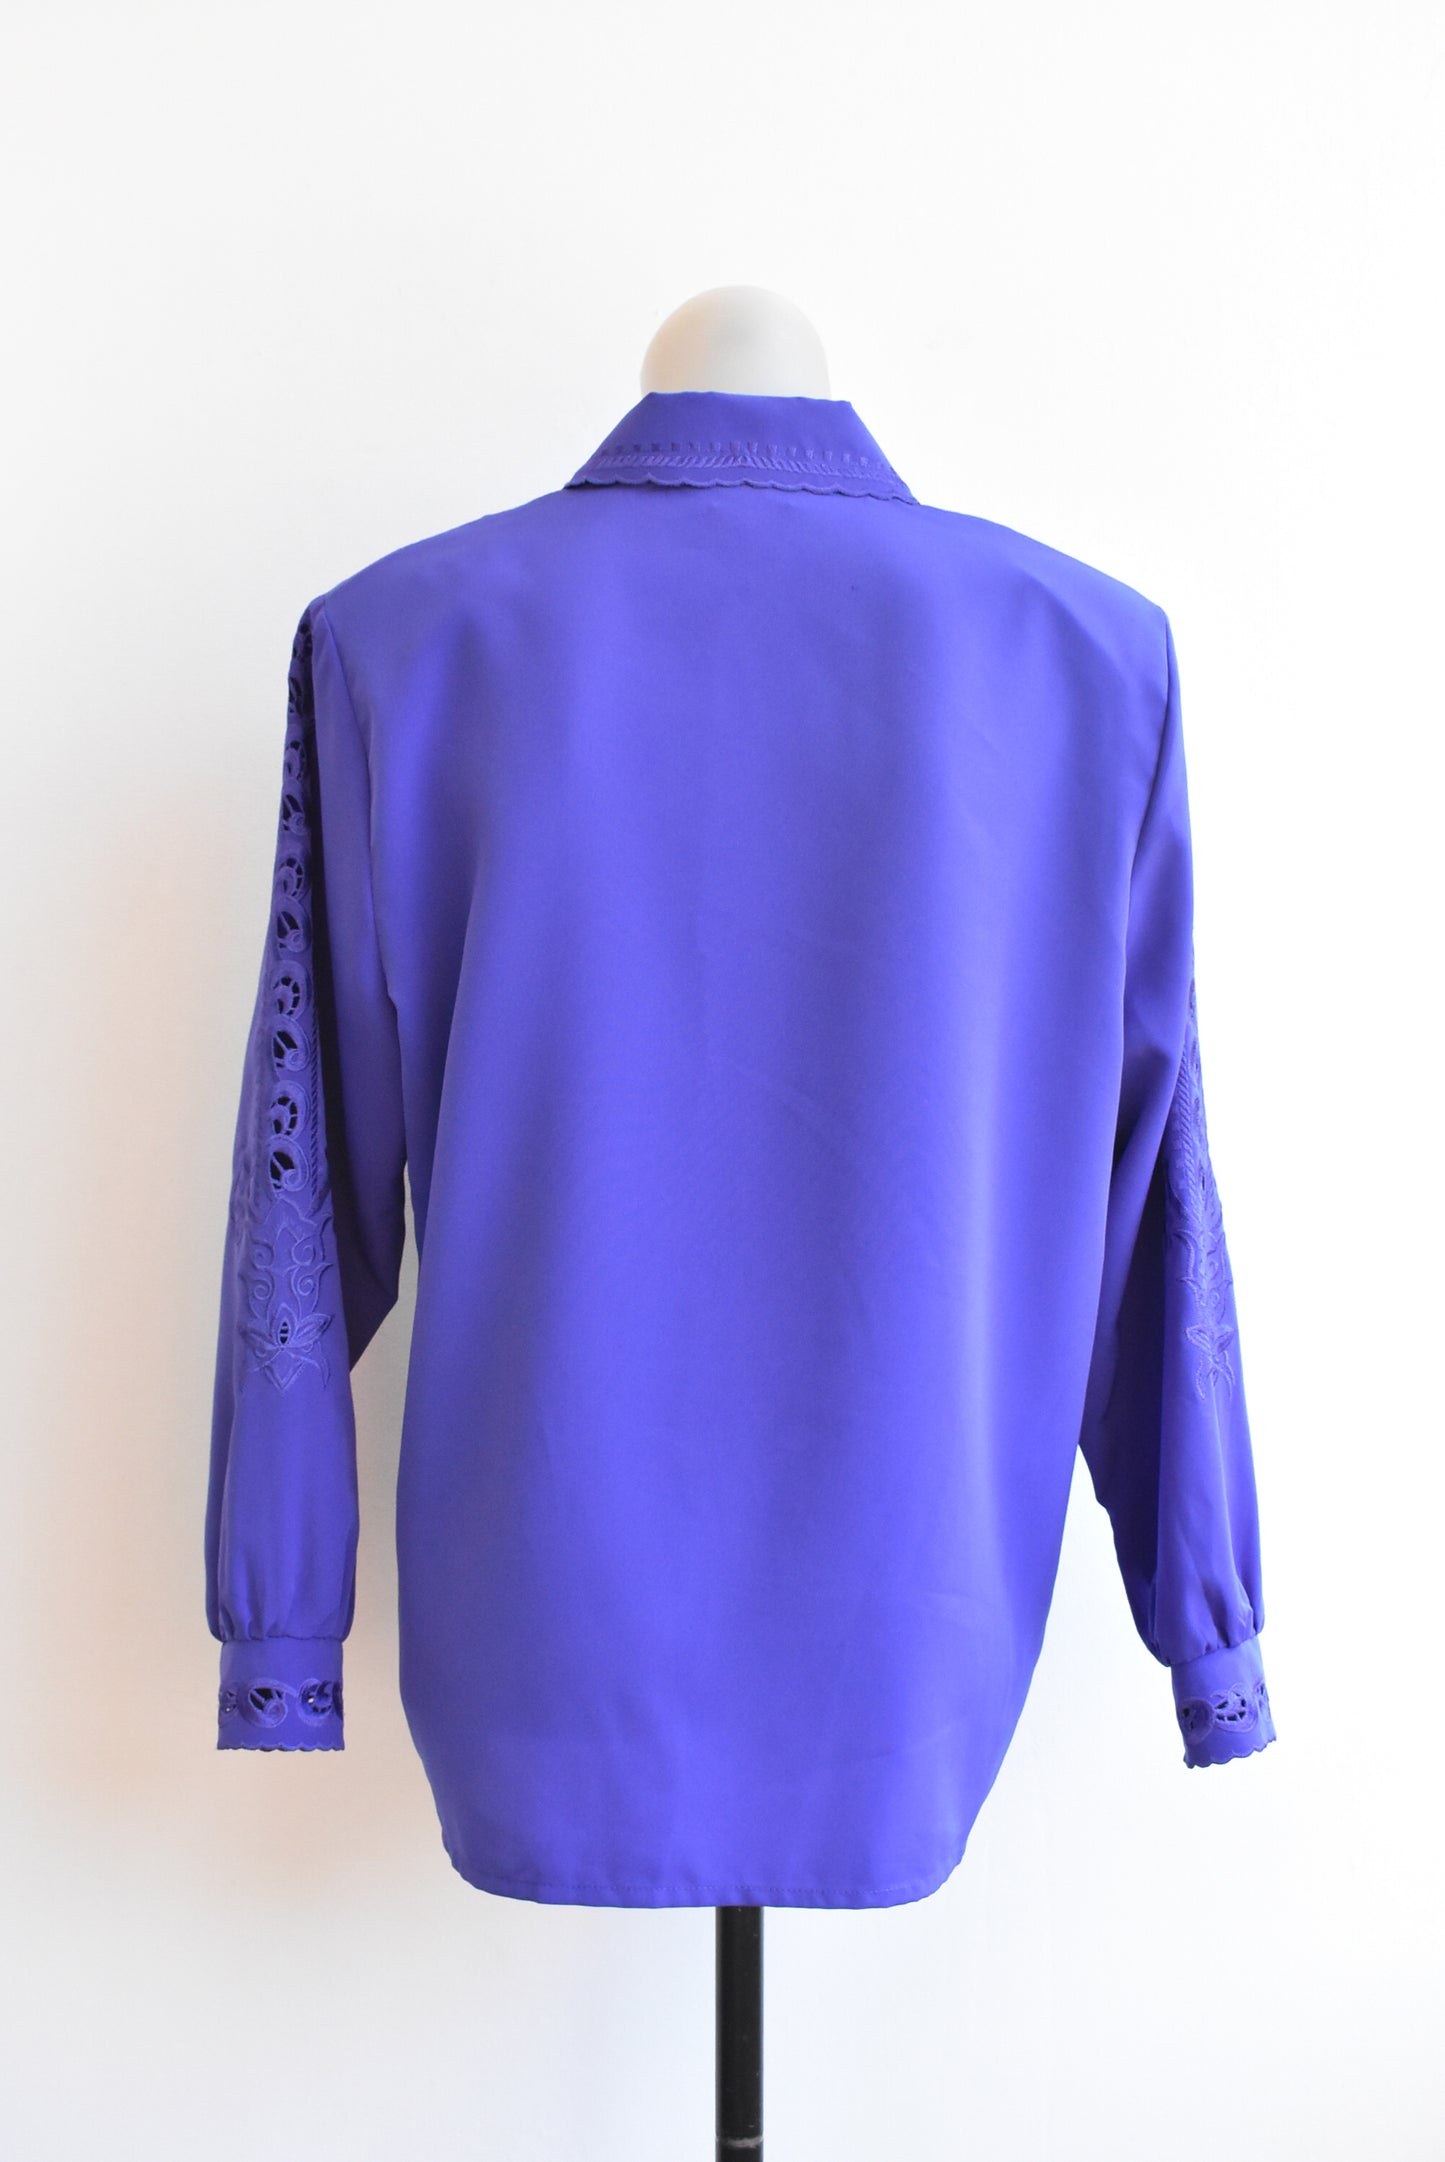 Retro purple embroidered blouse, size 15